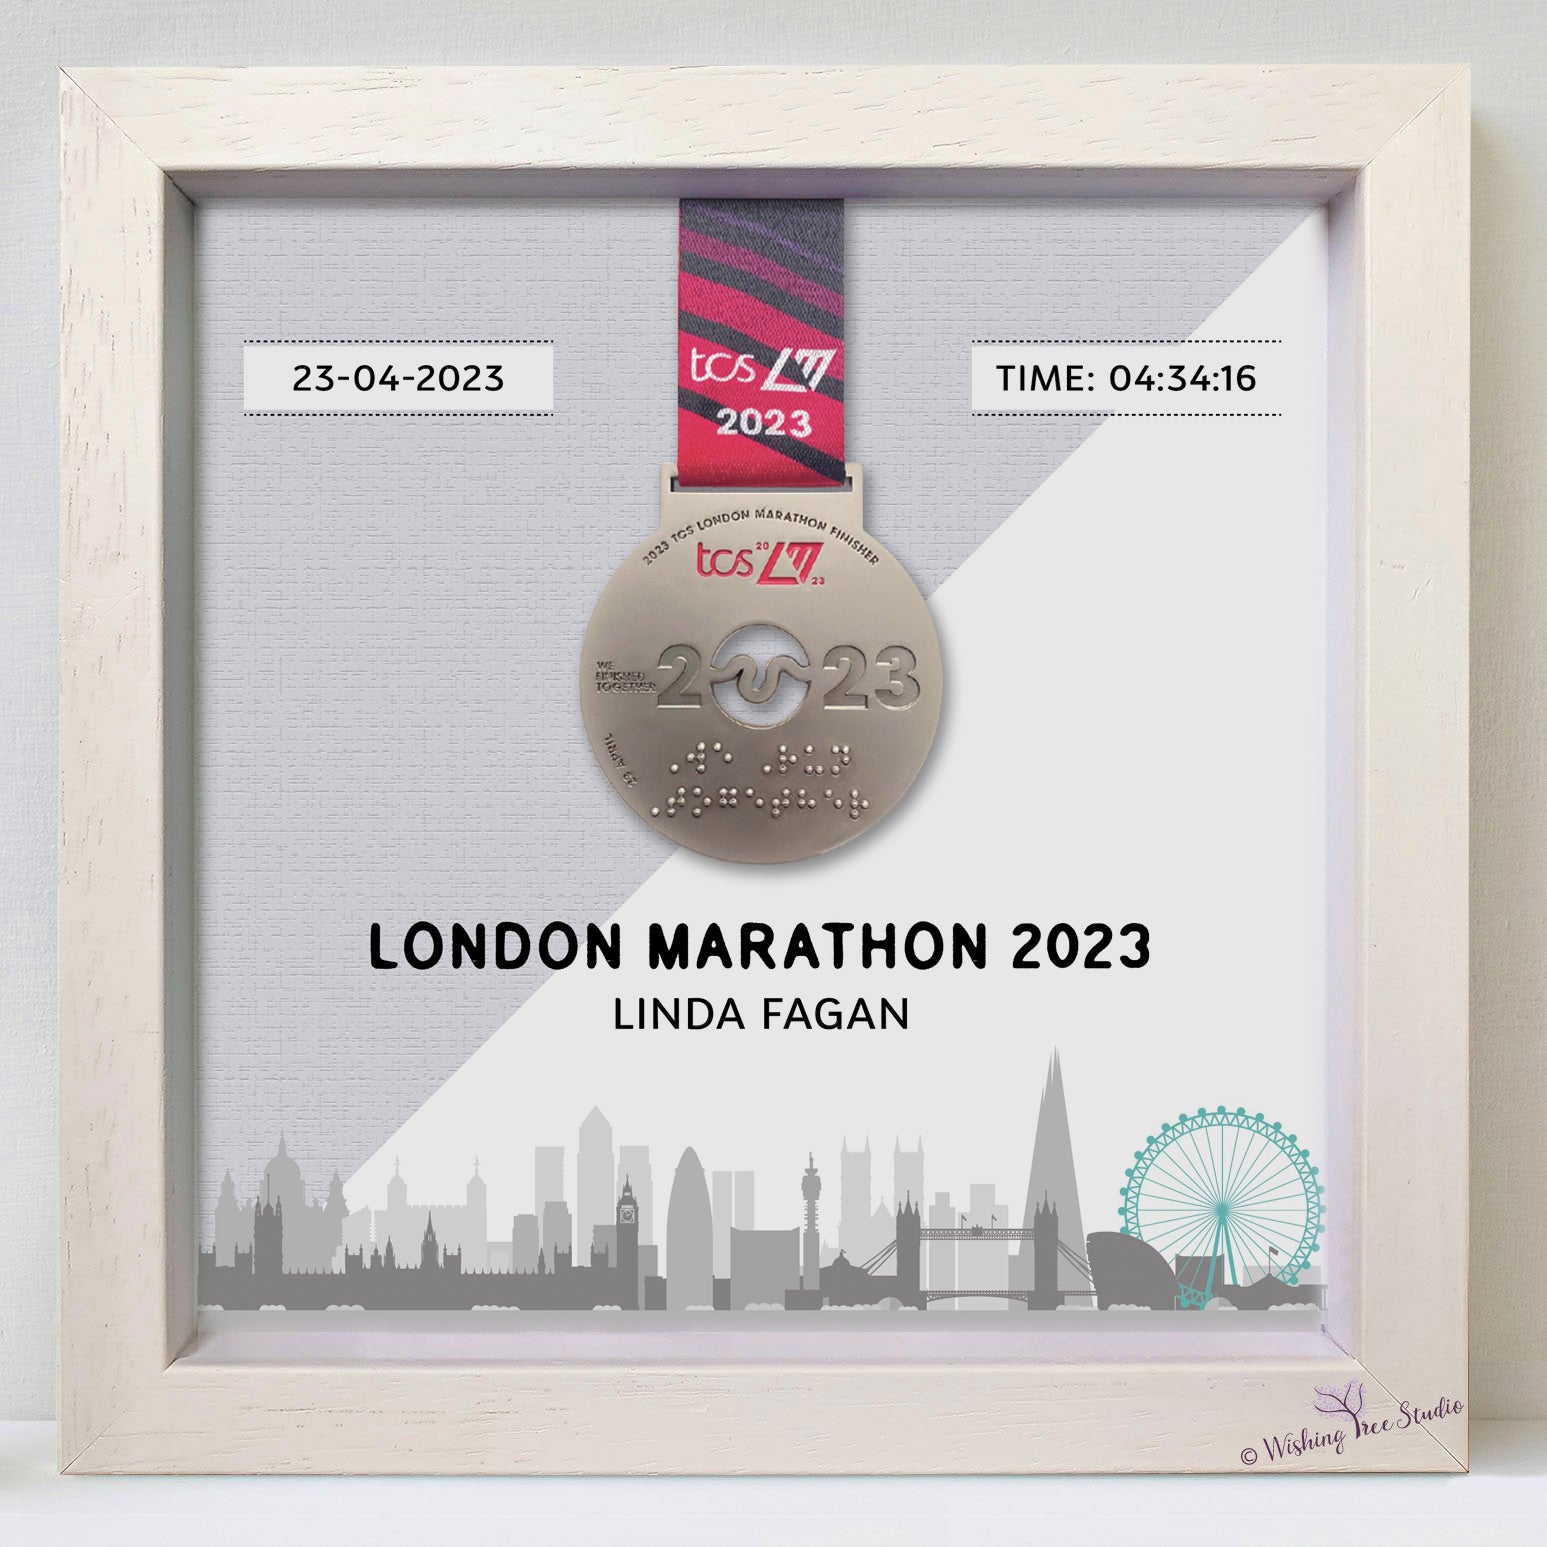 London marathon medal display frame